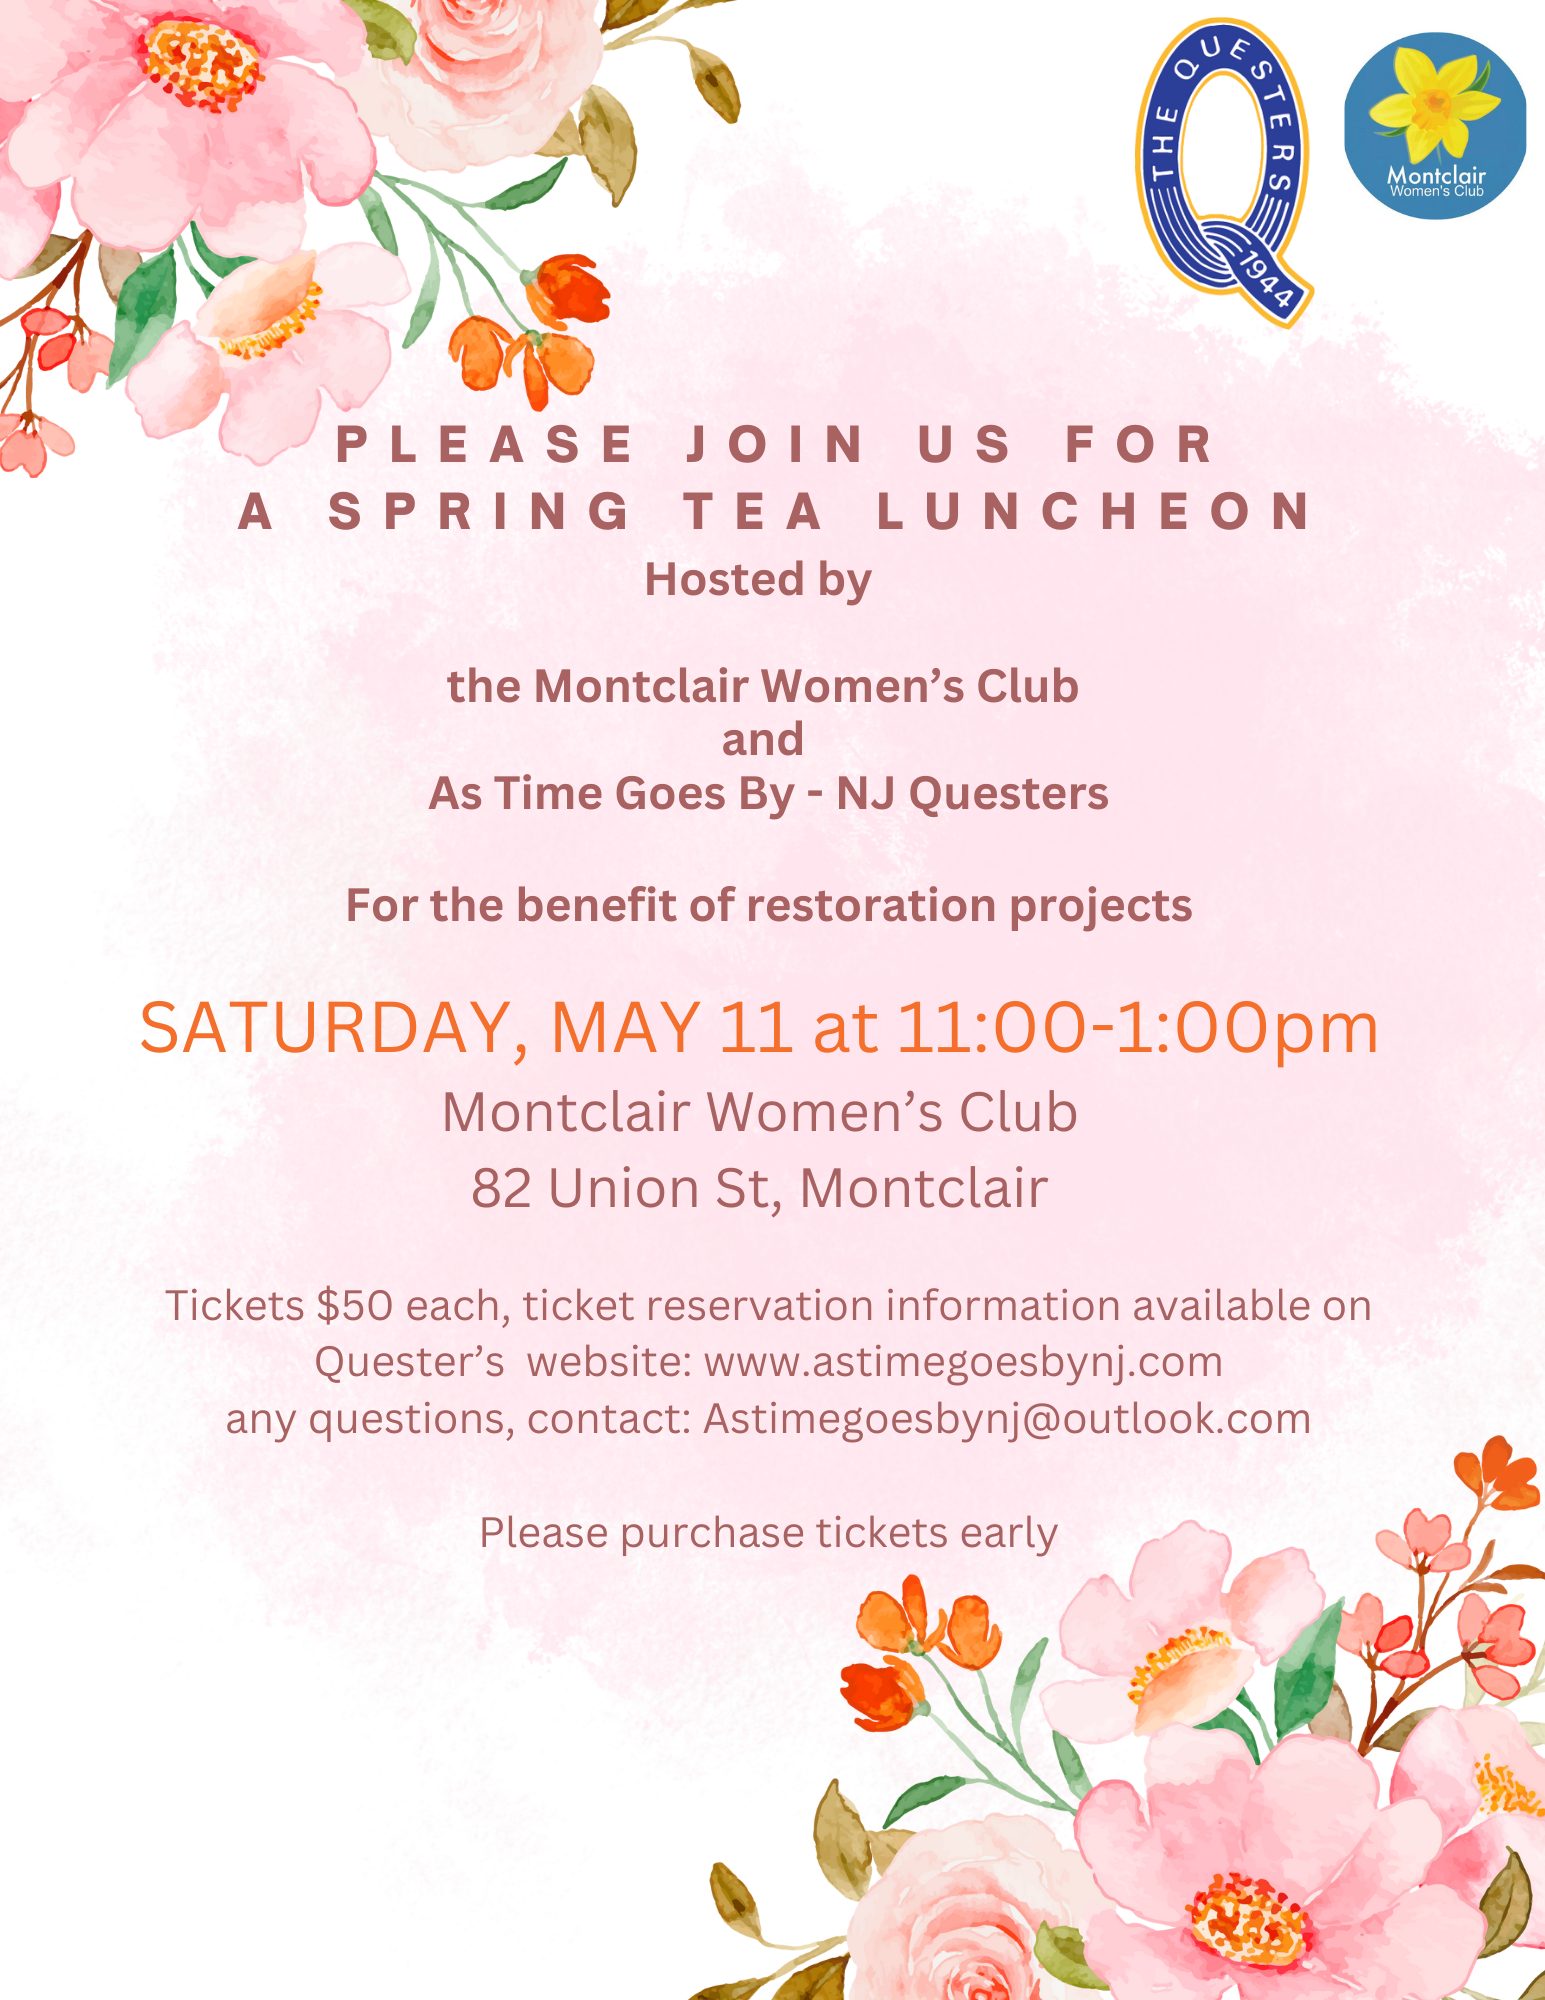 A Spring Tea Luncheon Fundraiser